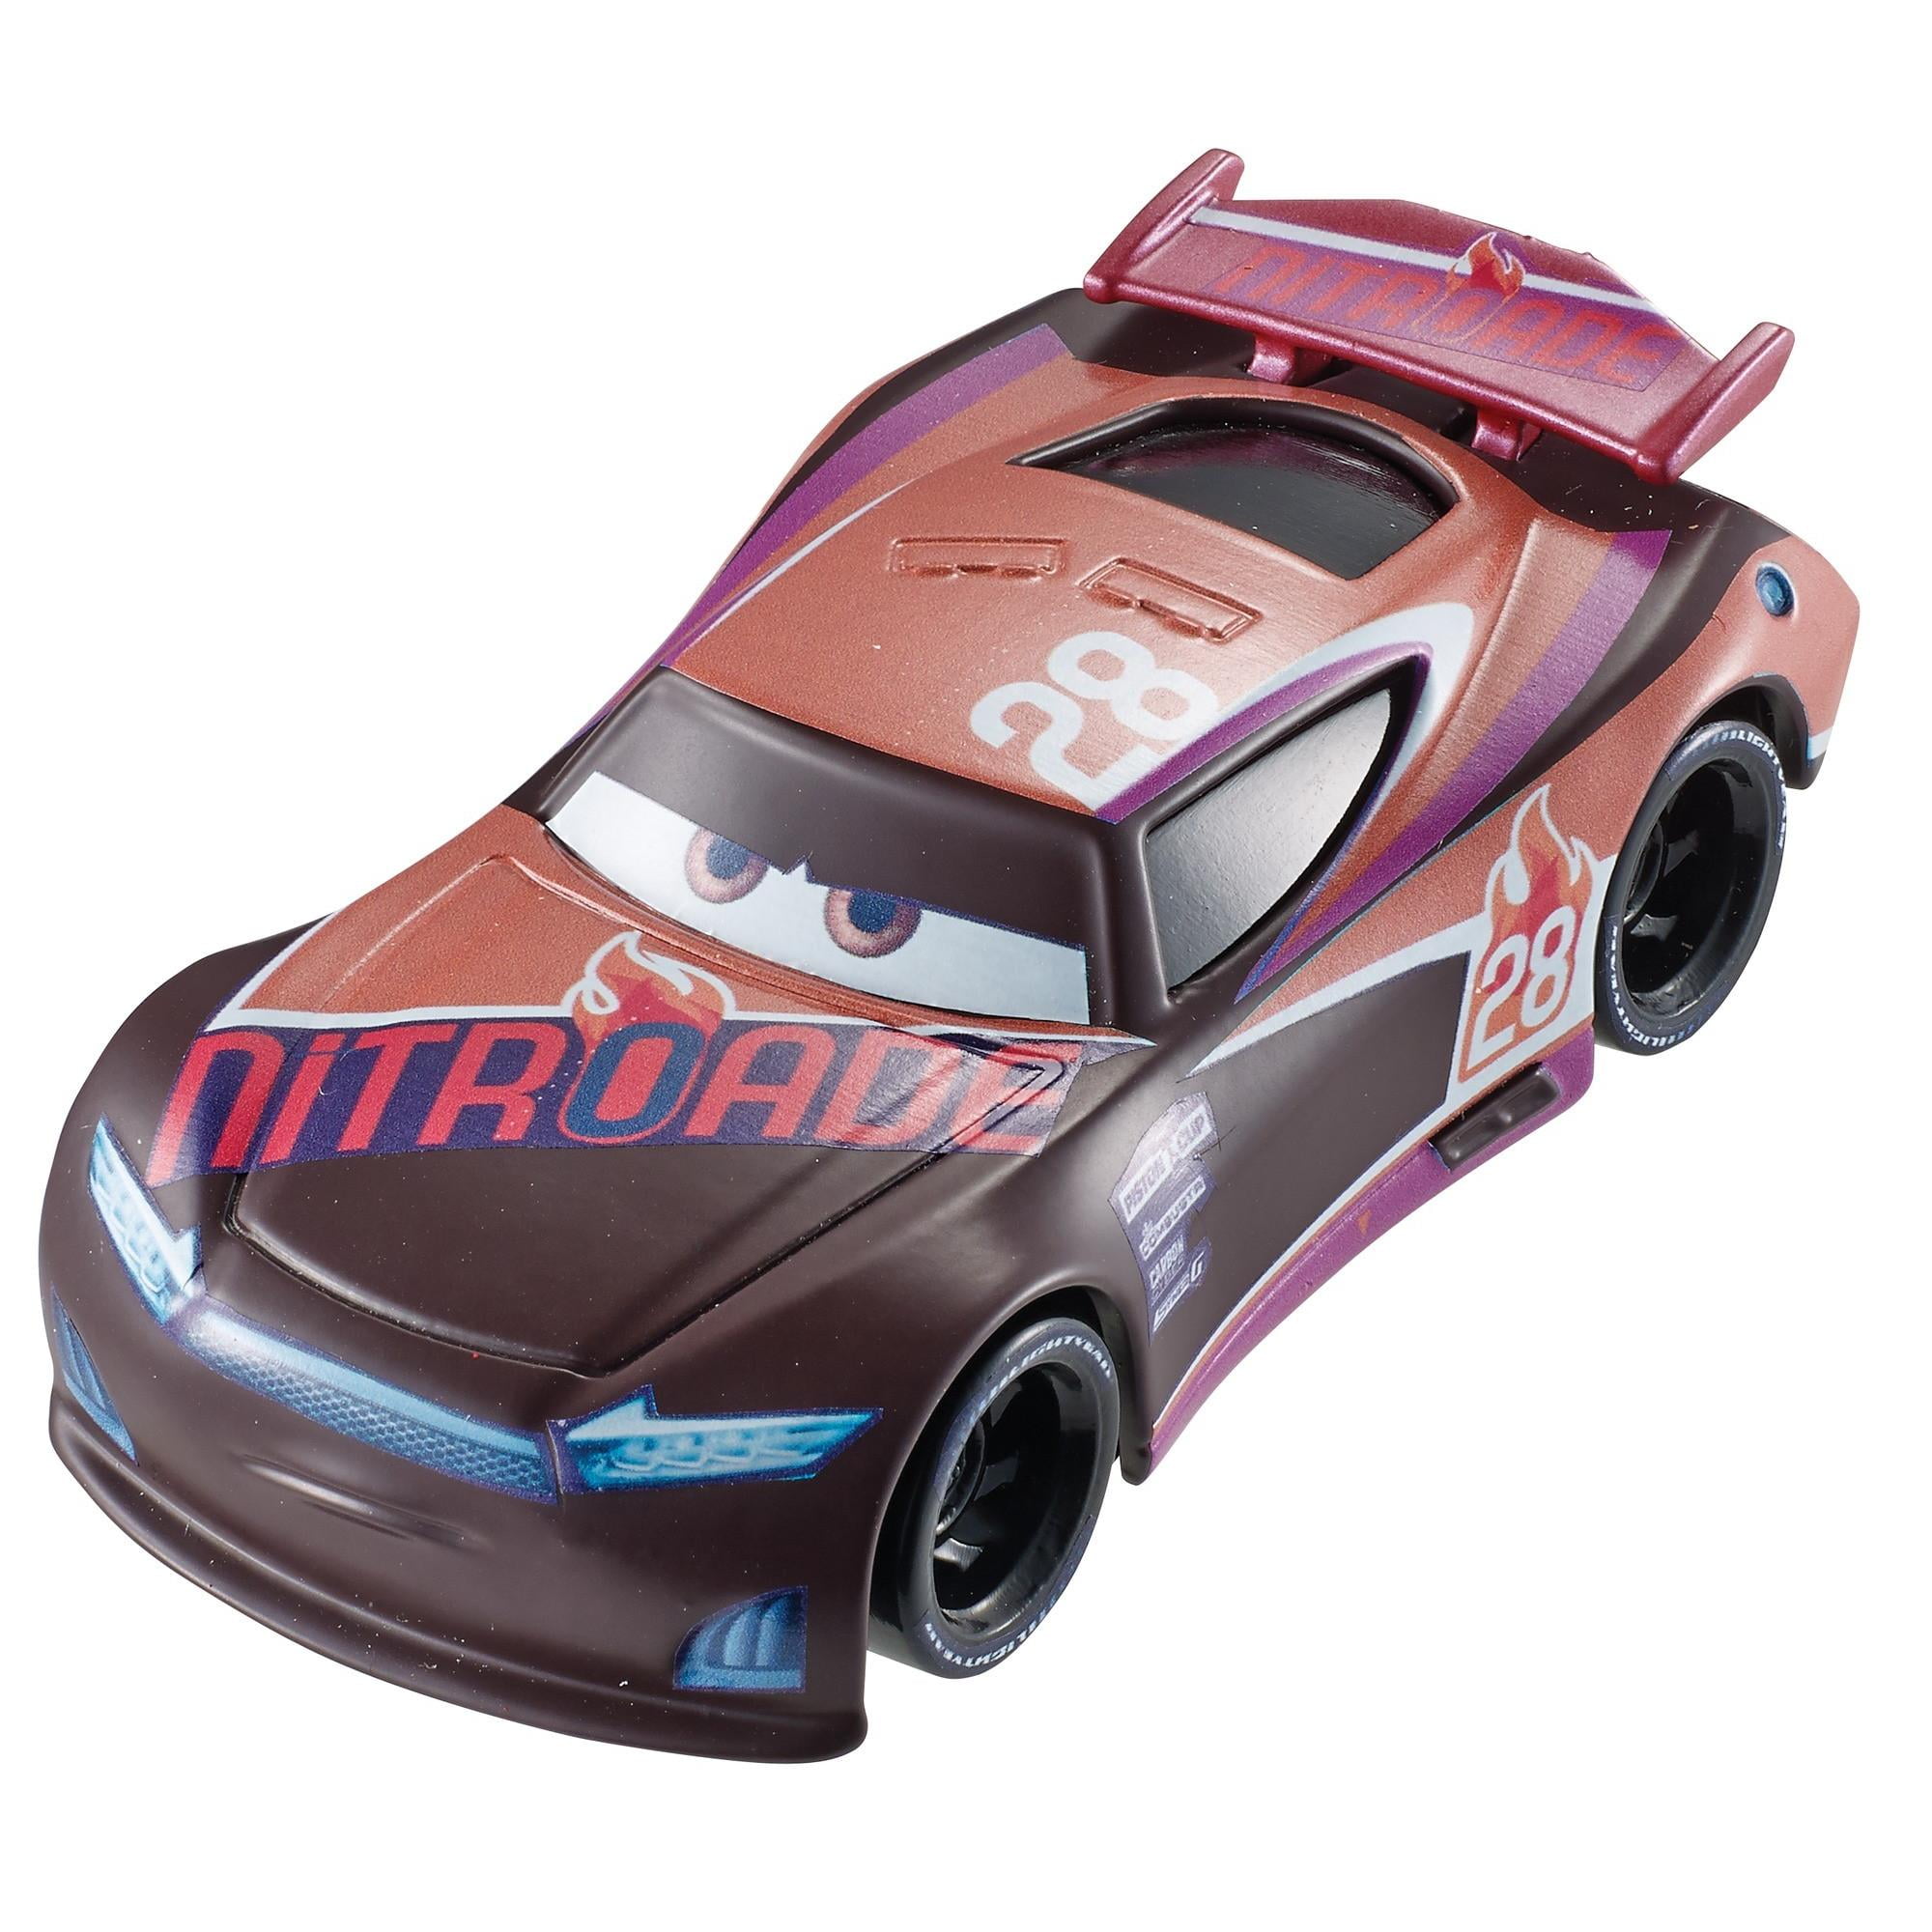 Mattel Disney Pixar Cars 3 Diecast Auto Tim Treadless Neuware New 